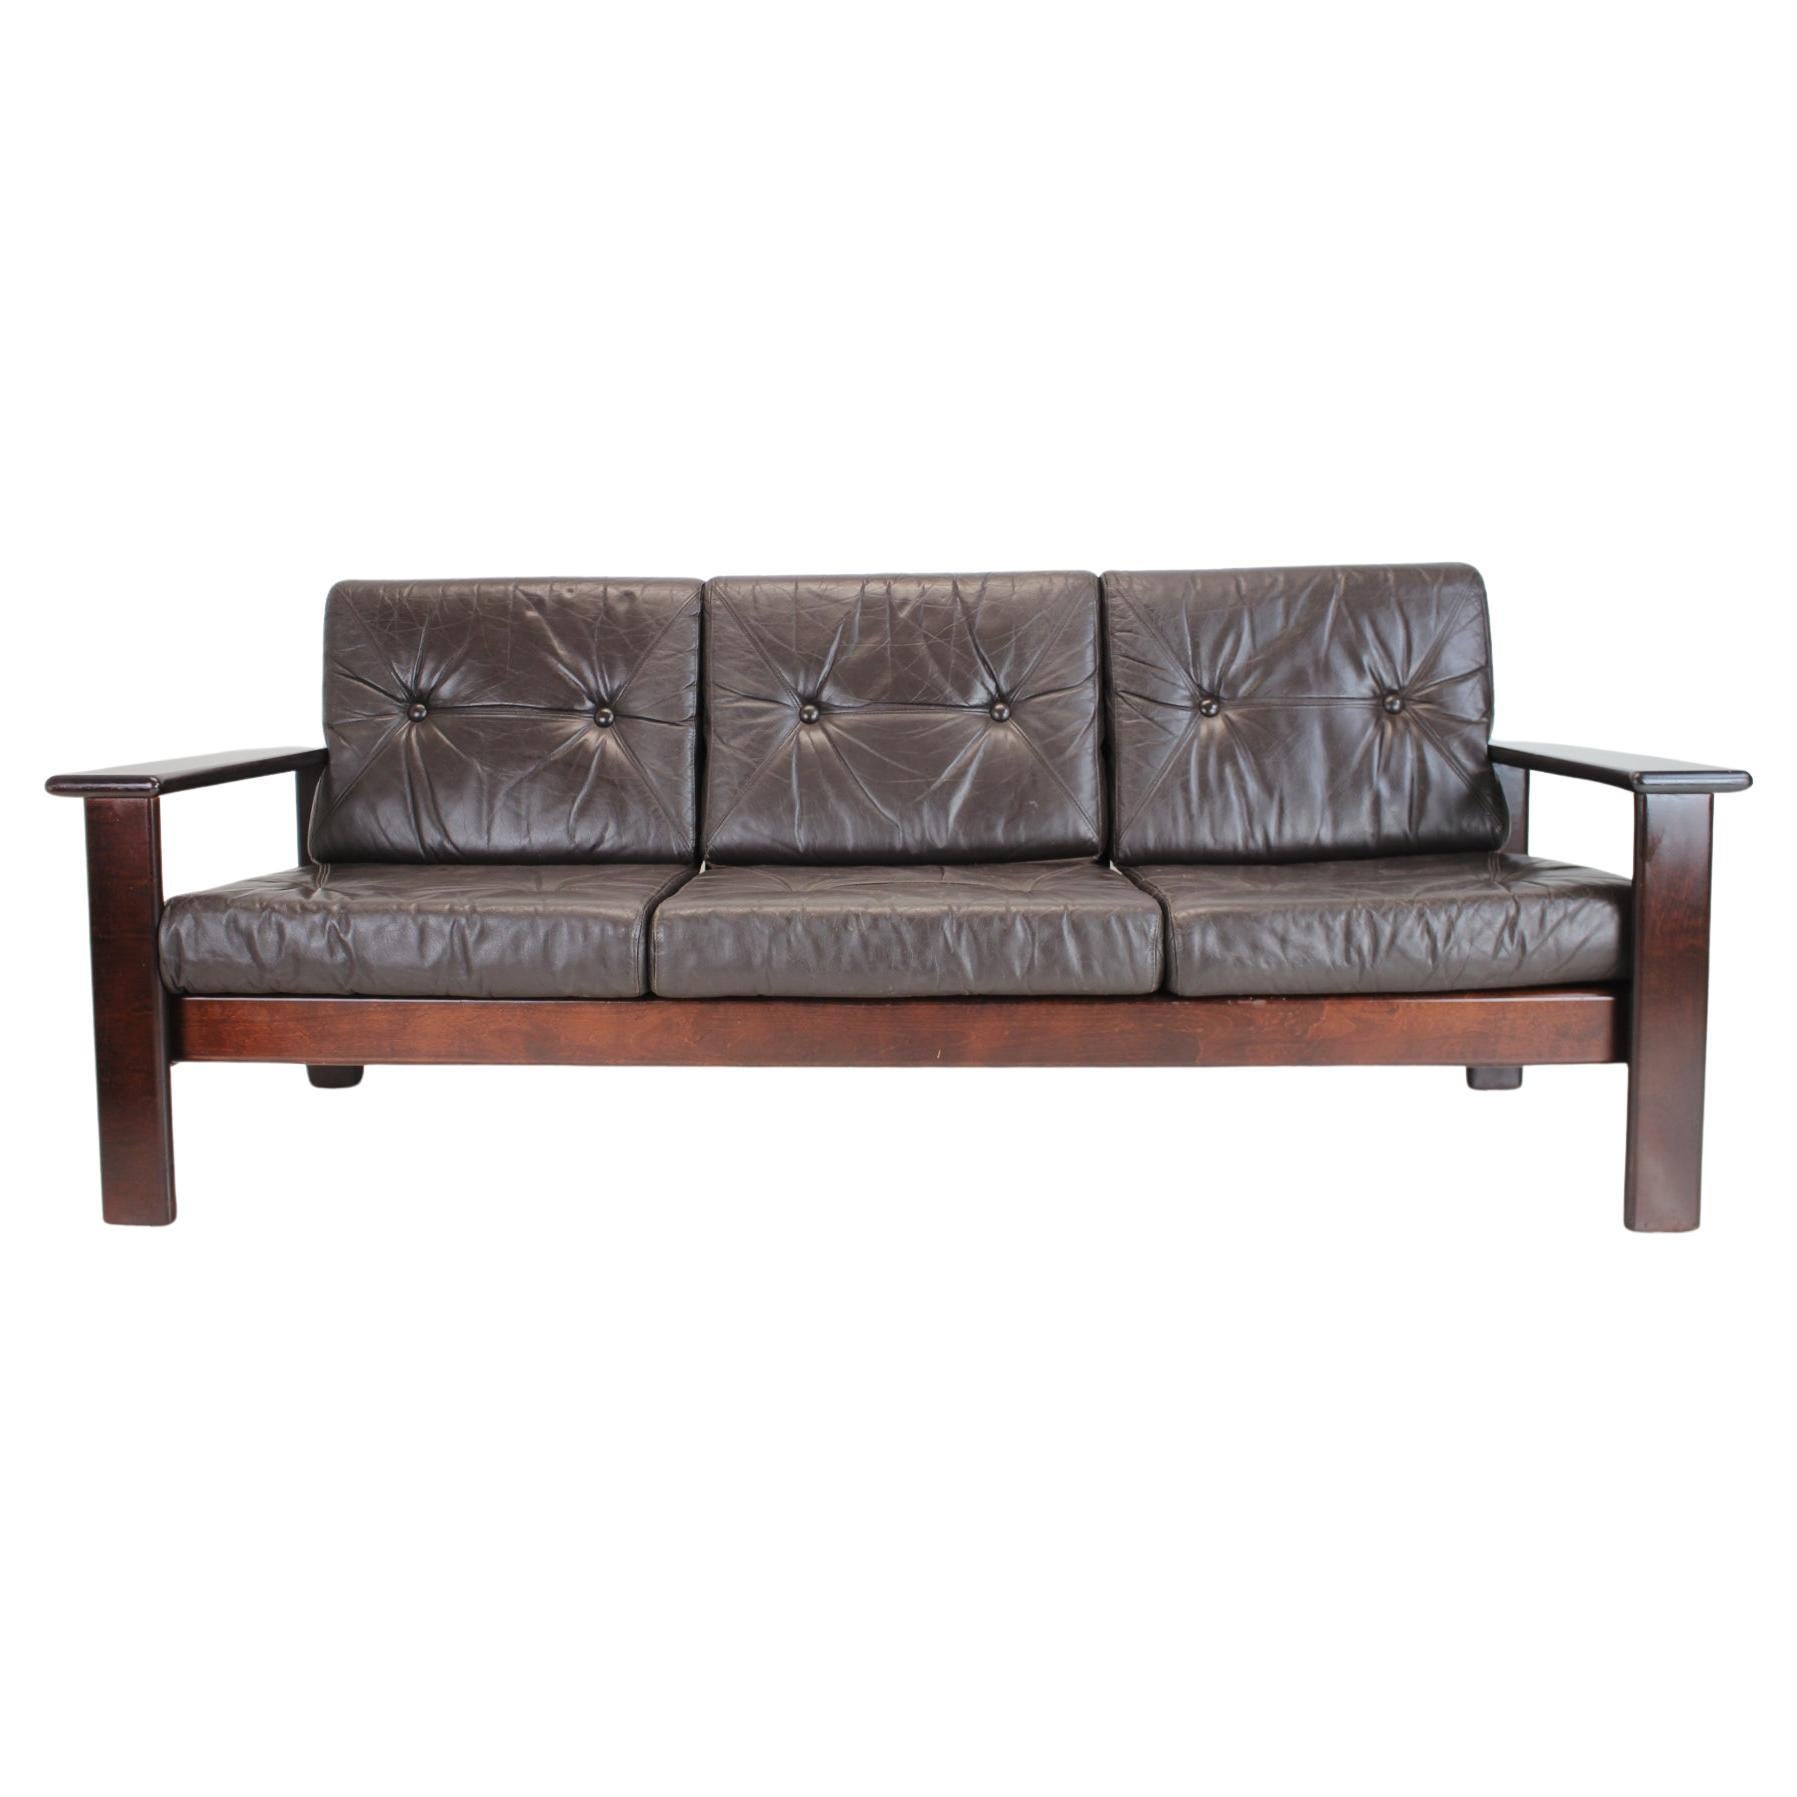 1960s Leather 3-Seater Scandinavian Sofa